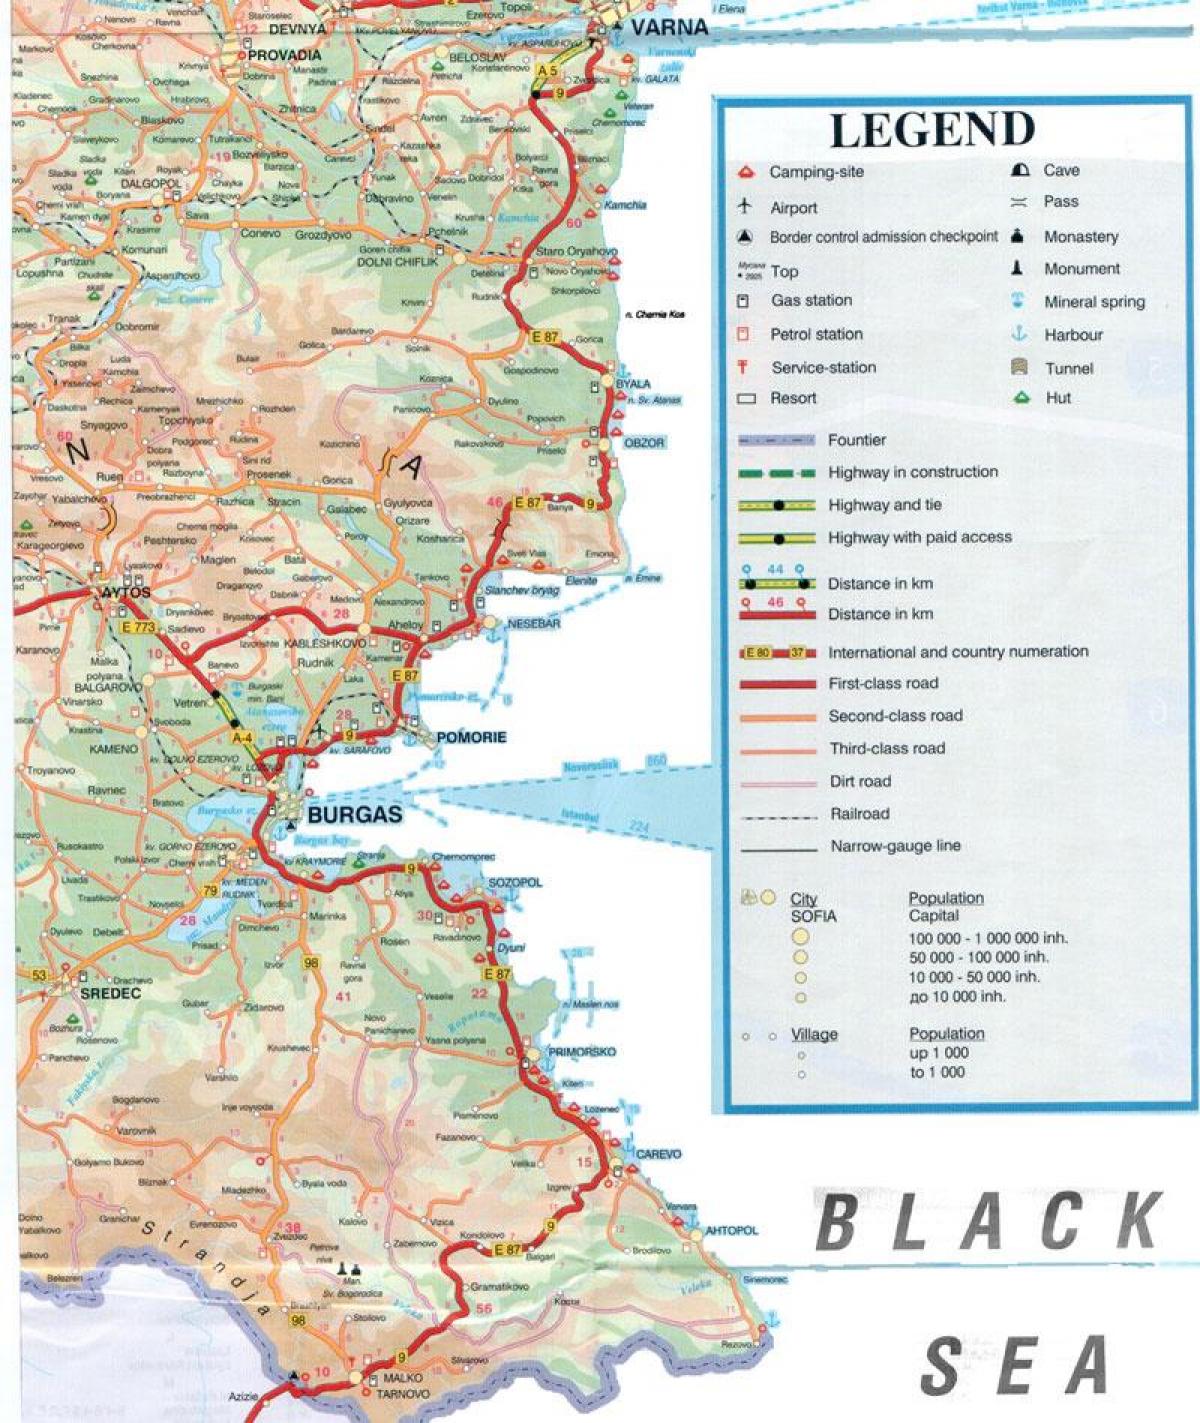 Lev costa do mar negro mapa